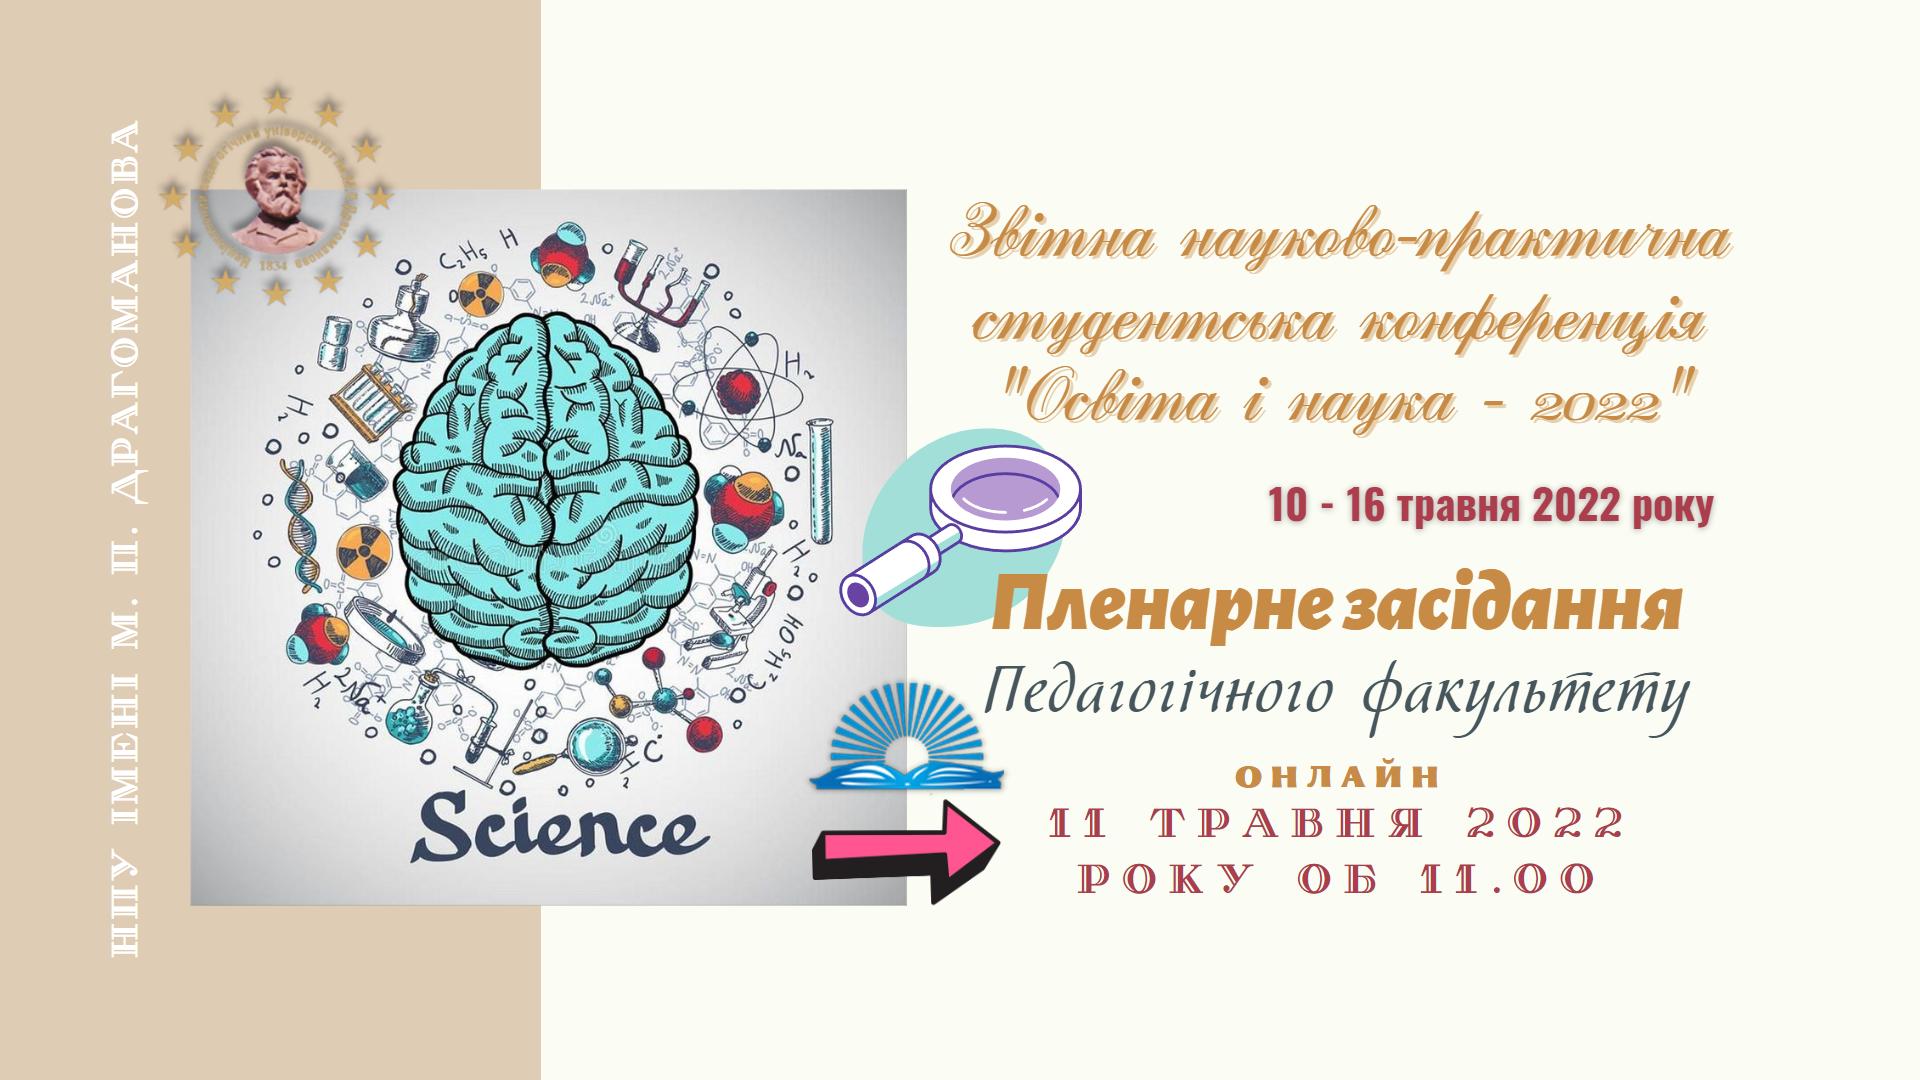 Освіта і наука 2022 НПУ Педфак